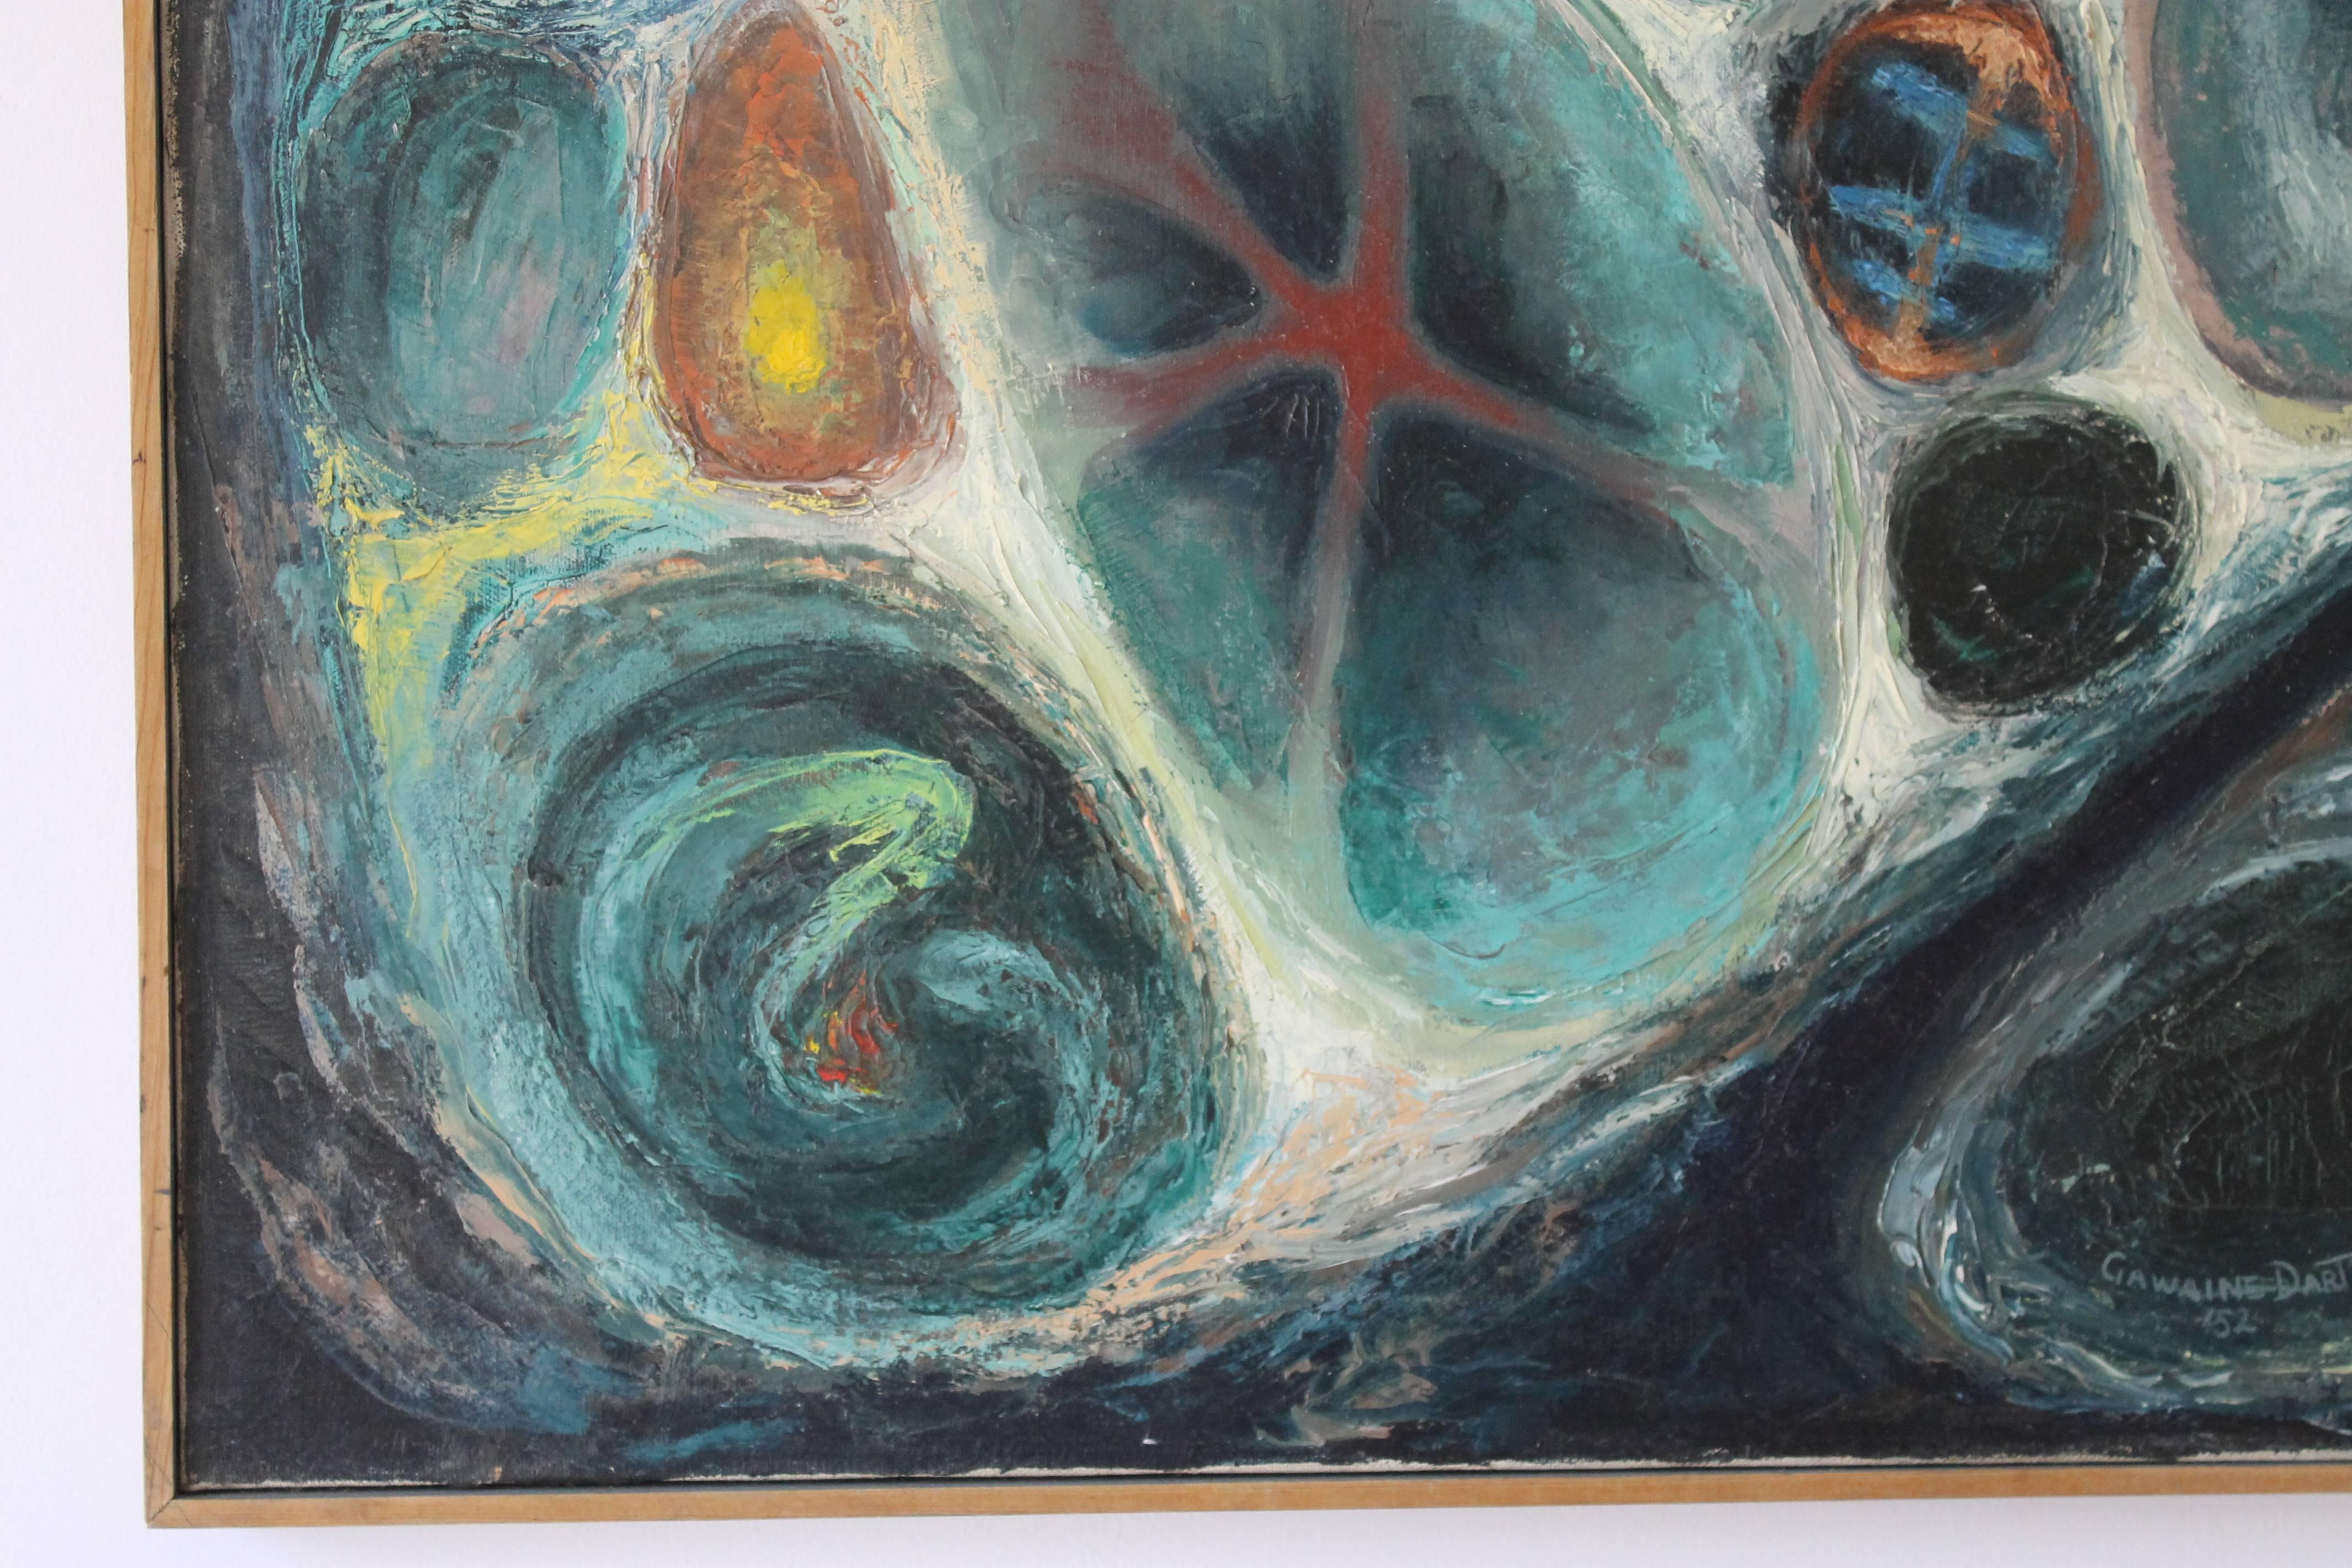 Gawaine Dart (1929-2014) oil painting titled 'Macromorph' titled 1952.  Painting measures 30.75” wide, 1.5